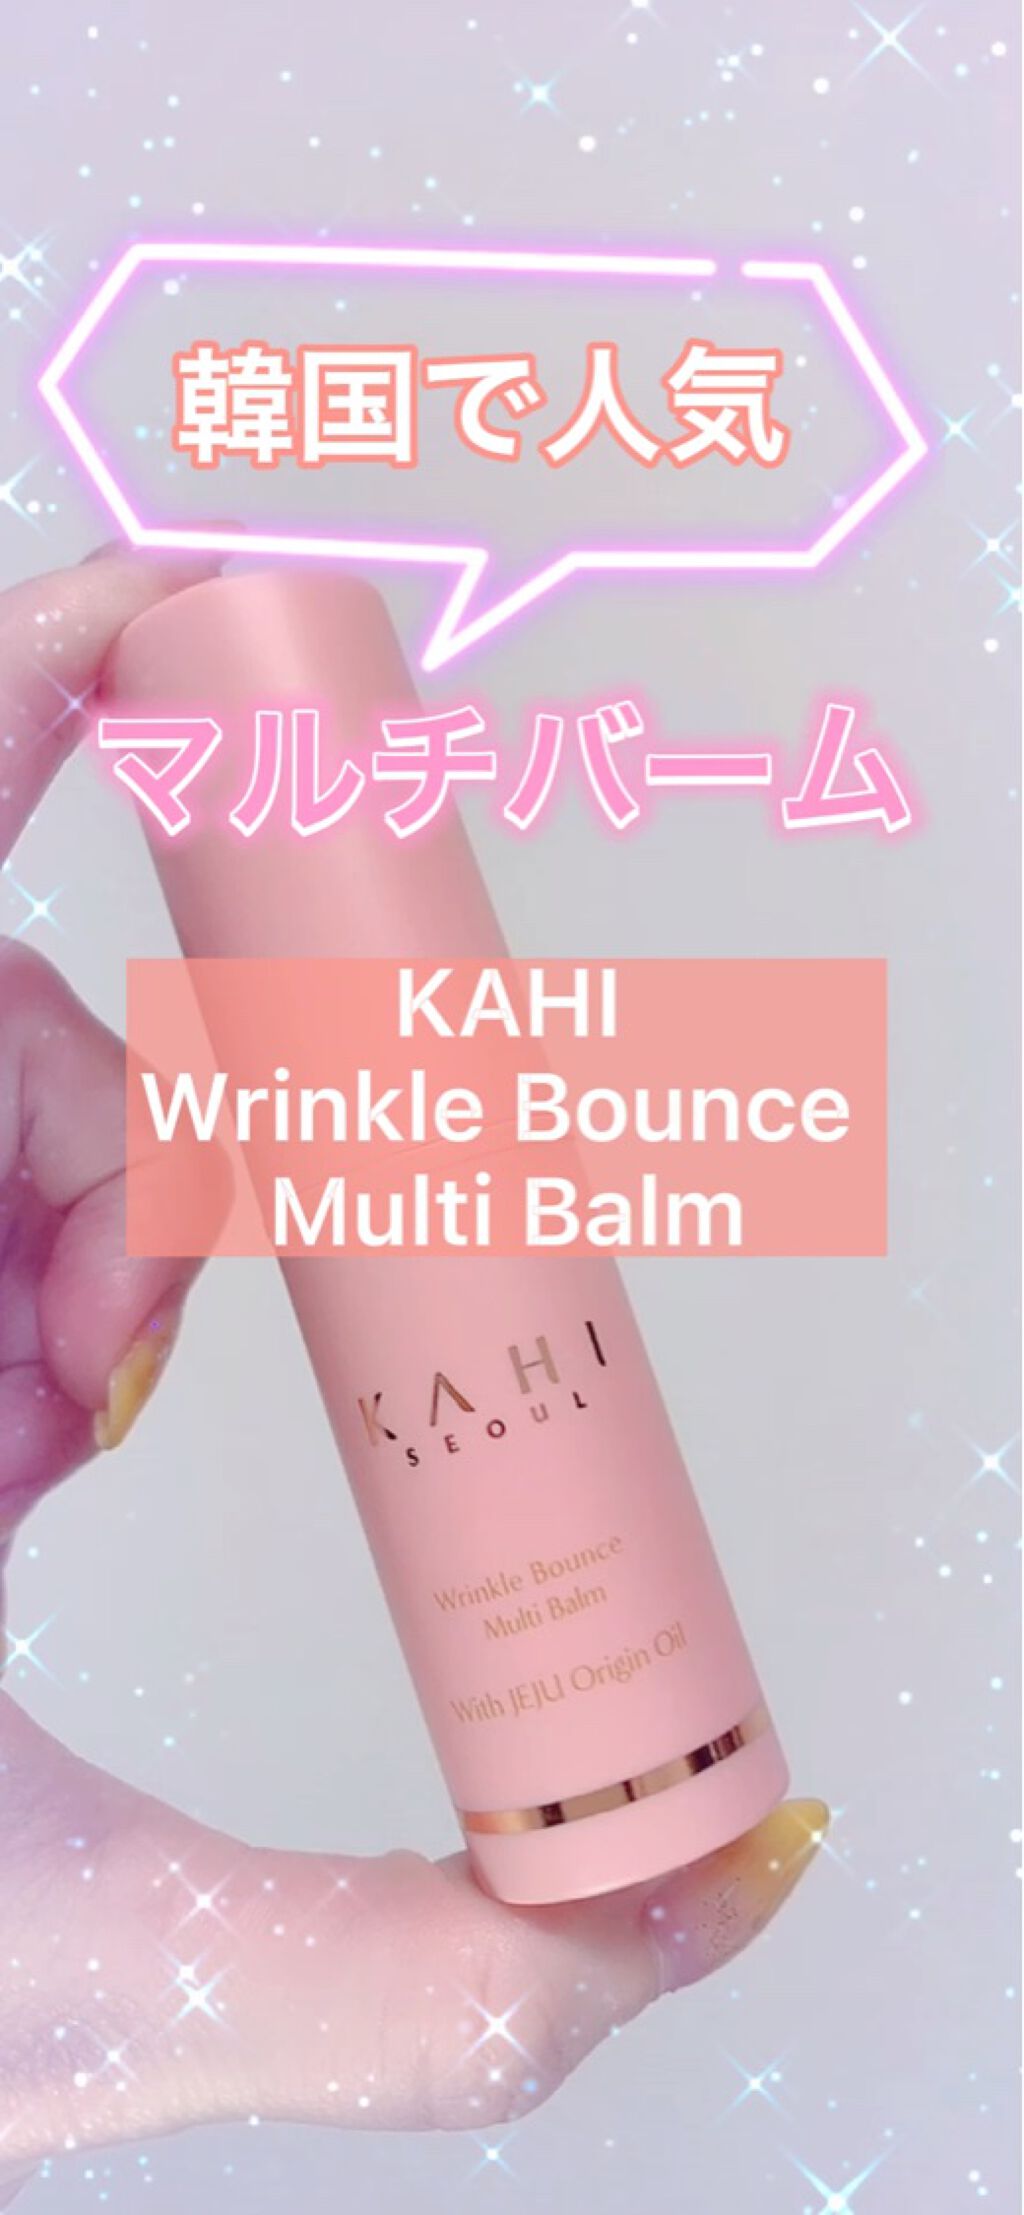 Wrinkle Bounce Multi Balm/KAHI/フェイスバームの動画クチコミ1つ目